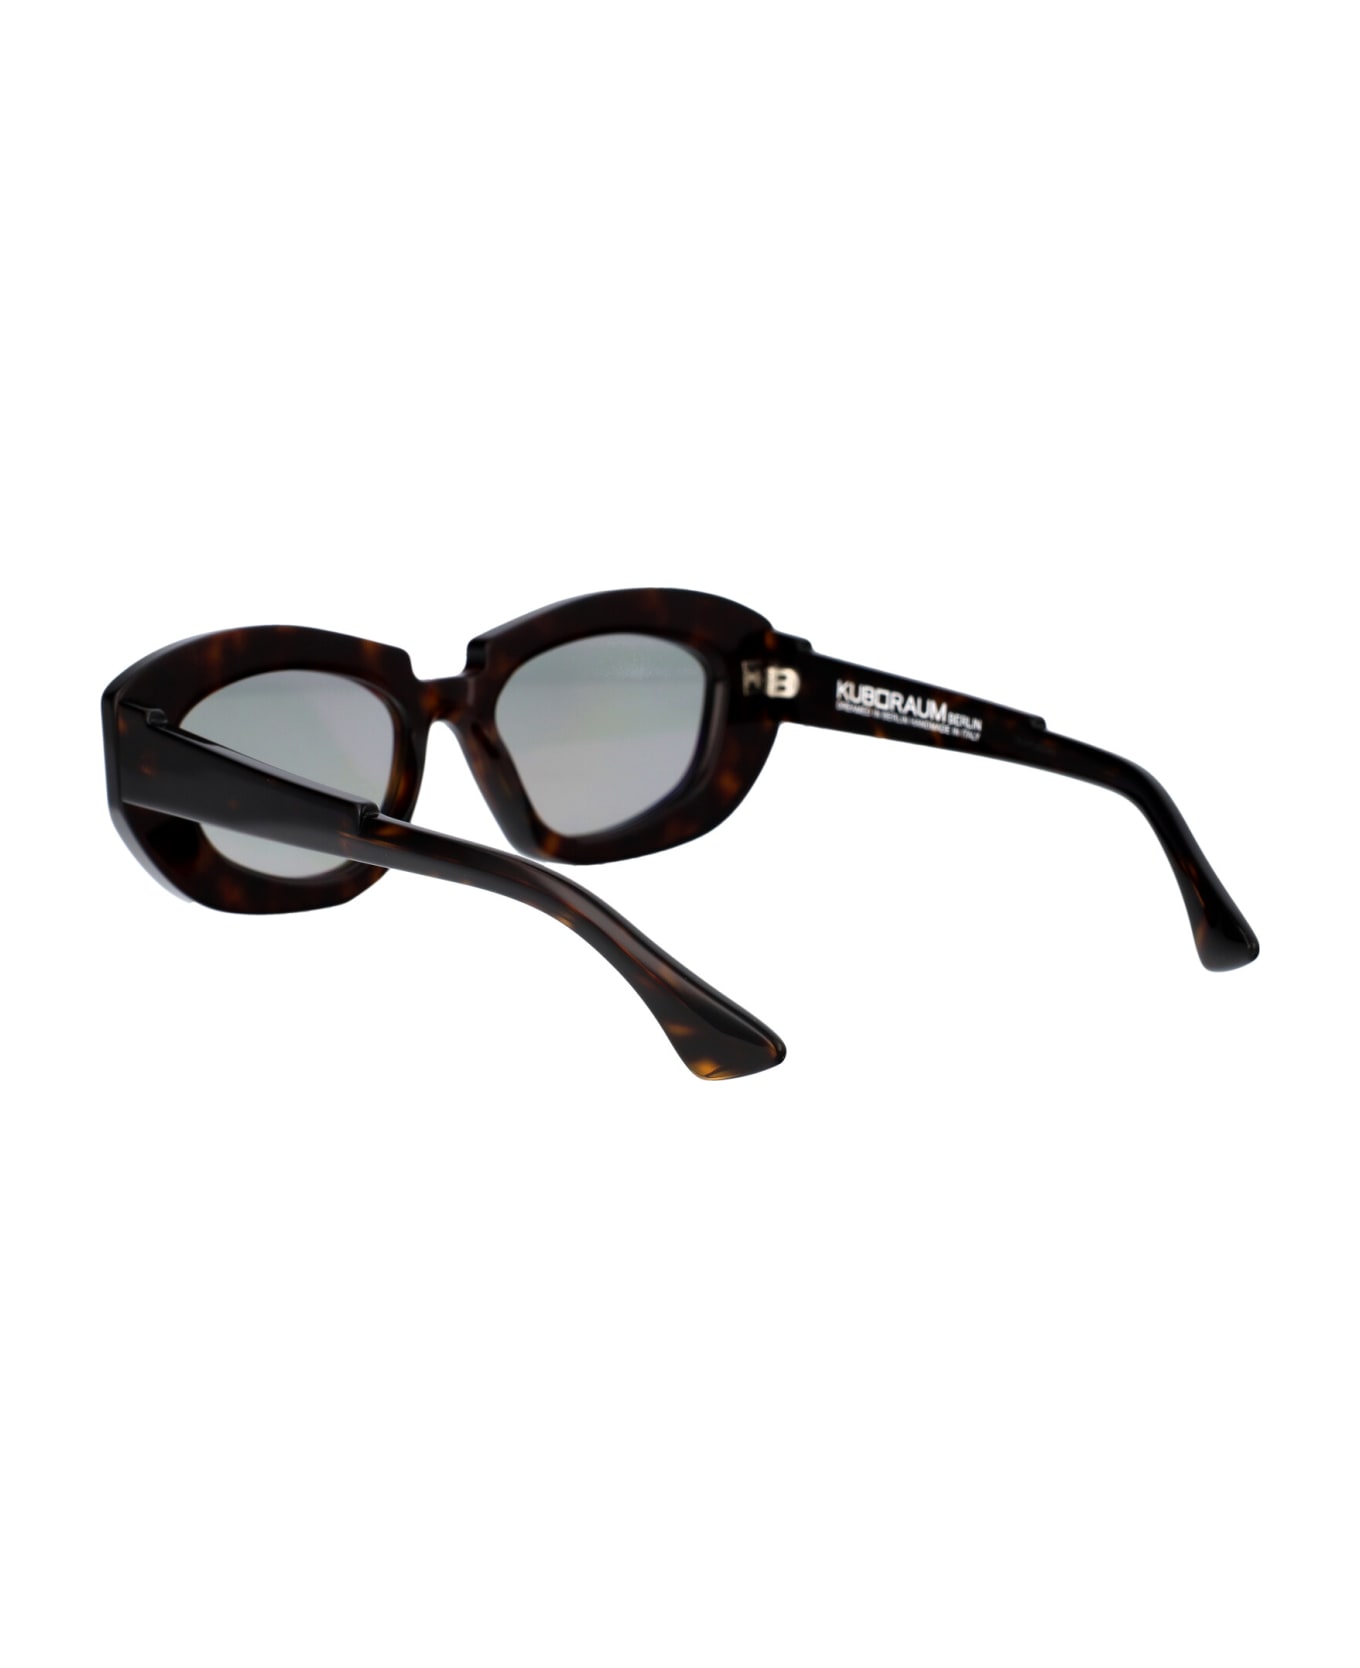 Kuboraum Maske X23 Sunglasses - TS grey1*